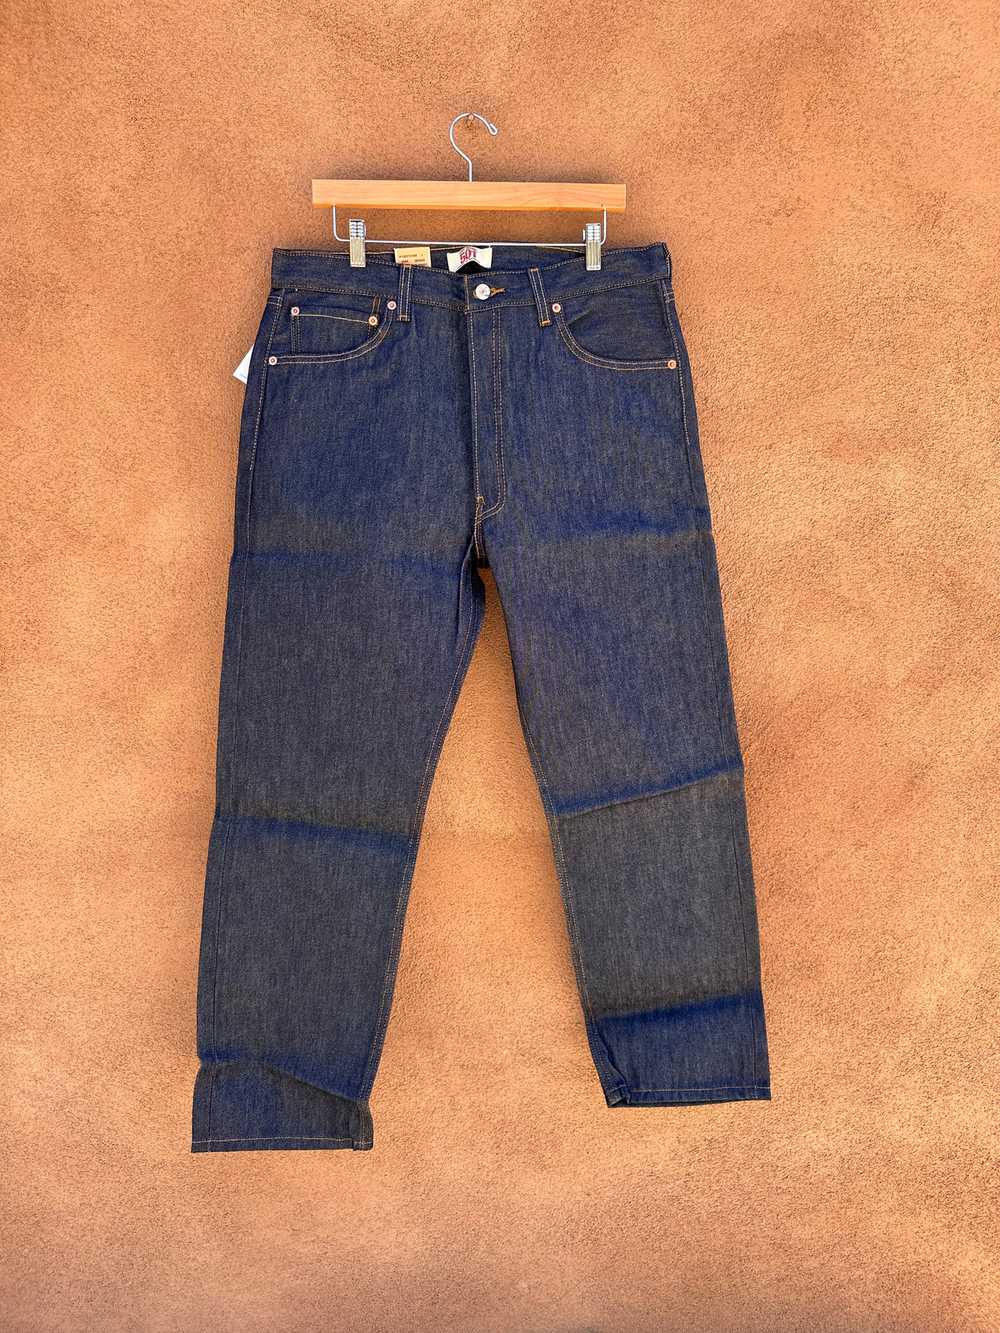 Levi's 501 90's Denim Jeans 35 x 30 - NWT - image 2